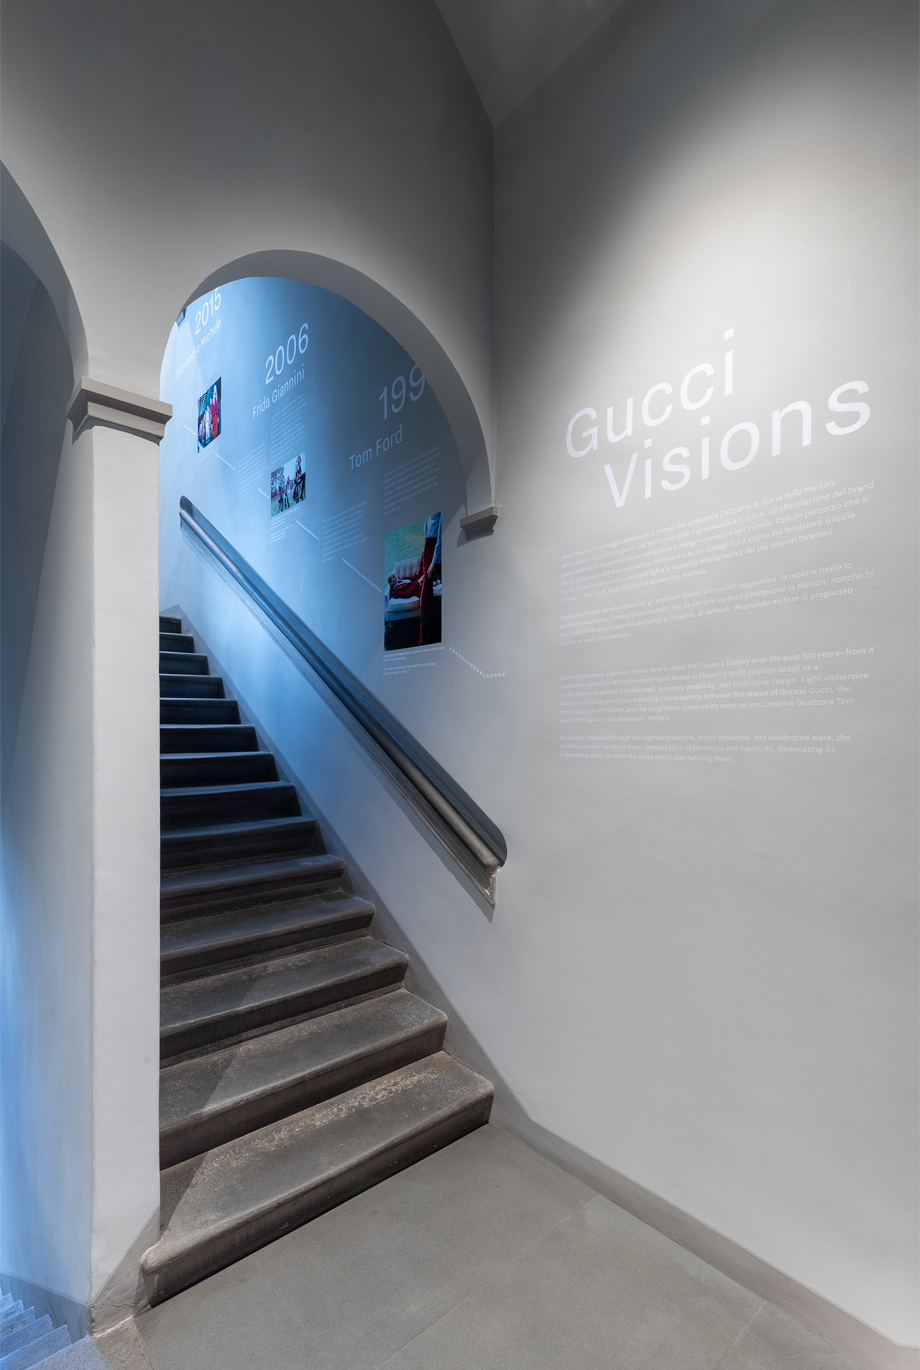 Staircase of Gucci Garden with description of the exhibition